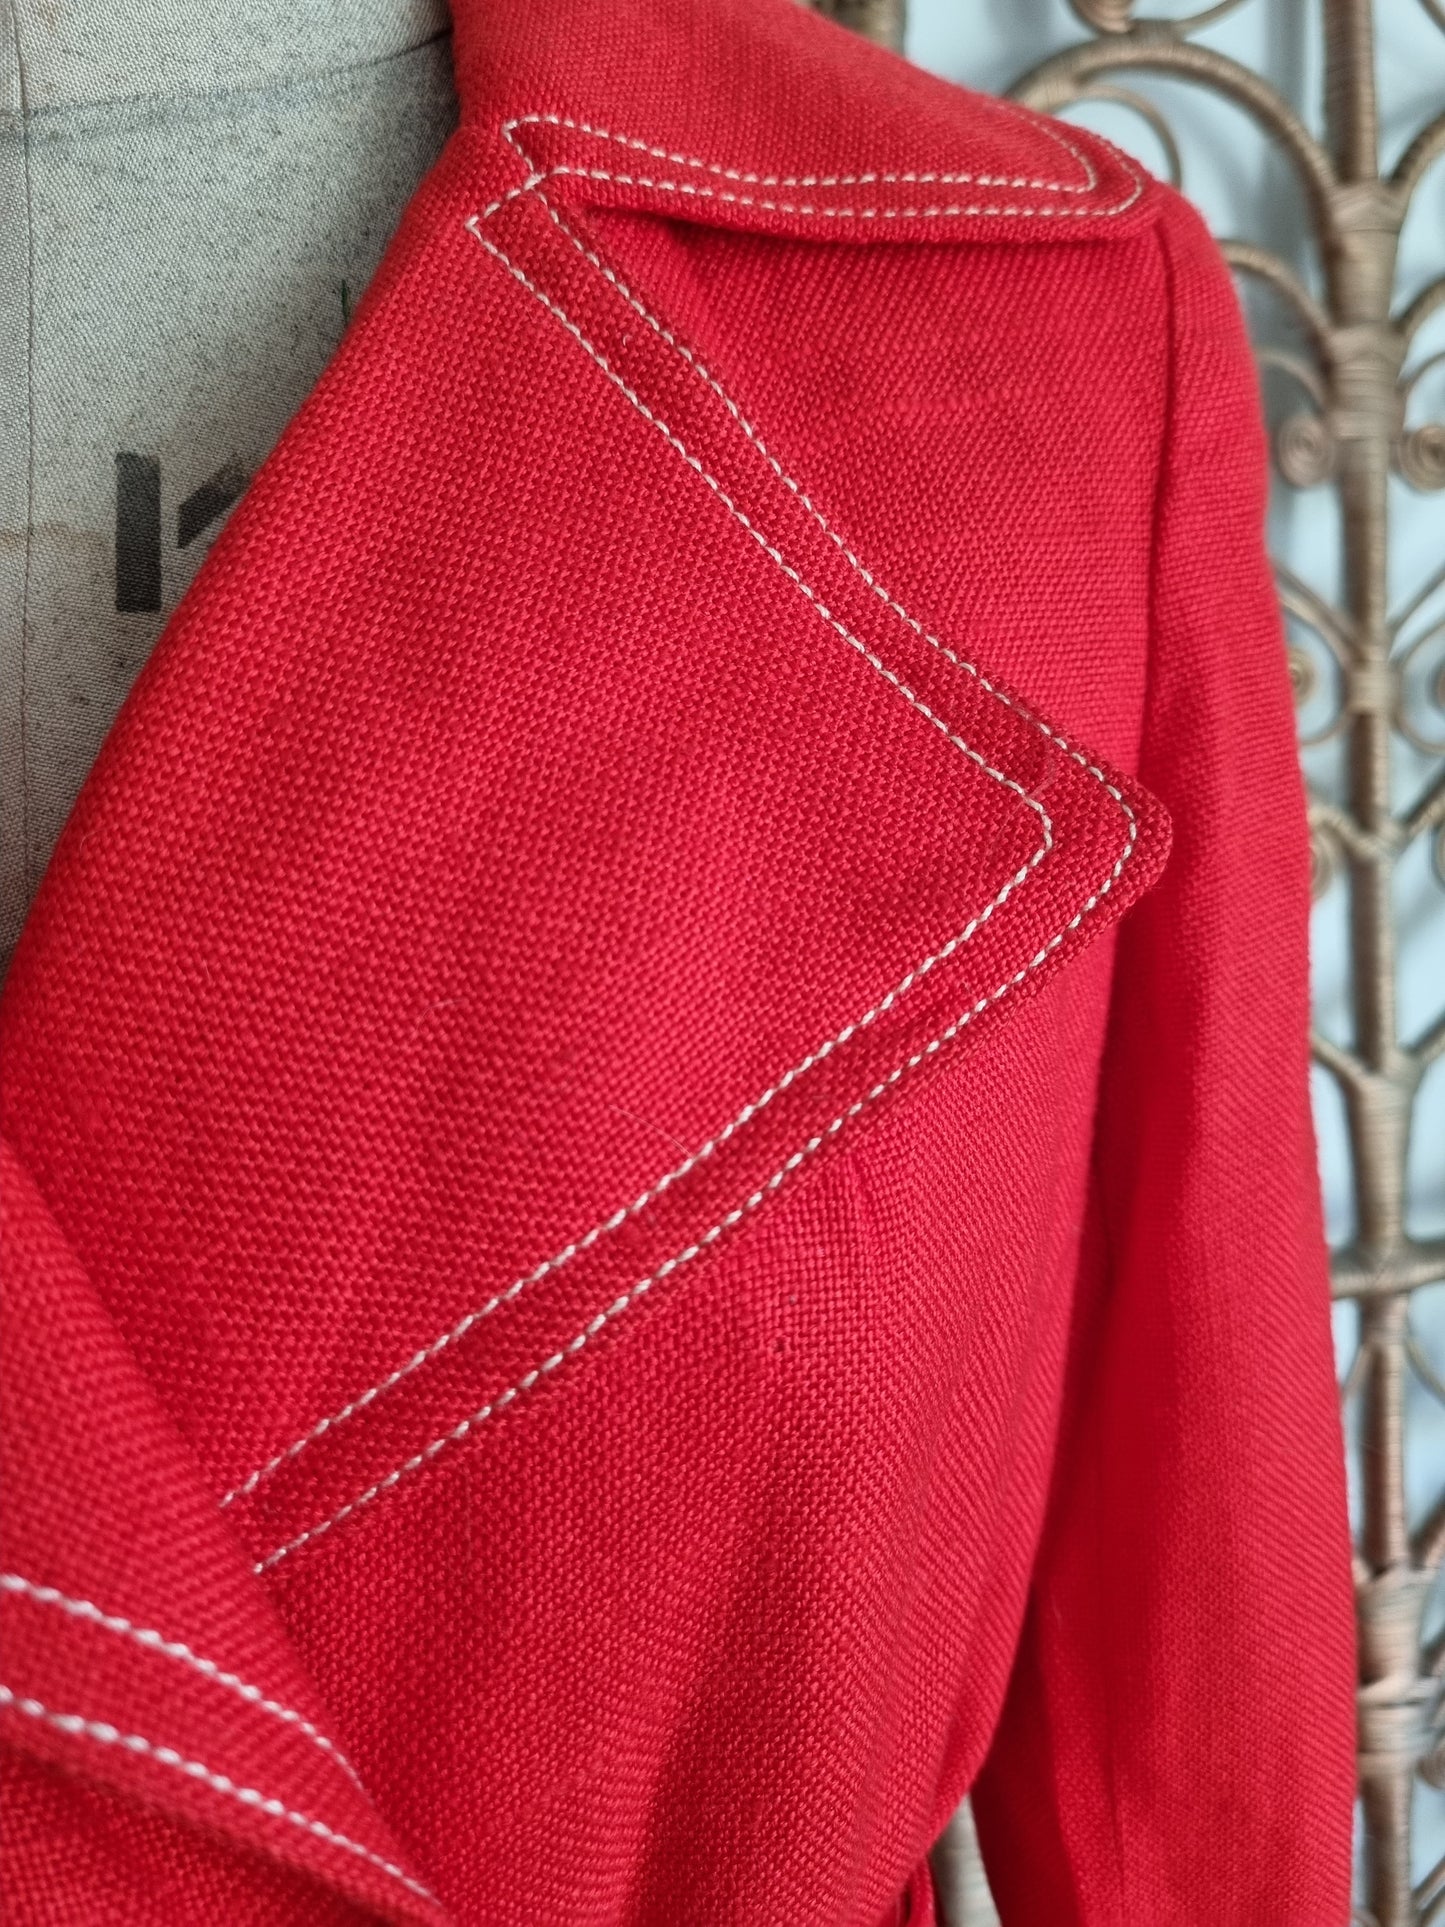 Vintage red 60s jacket